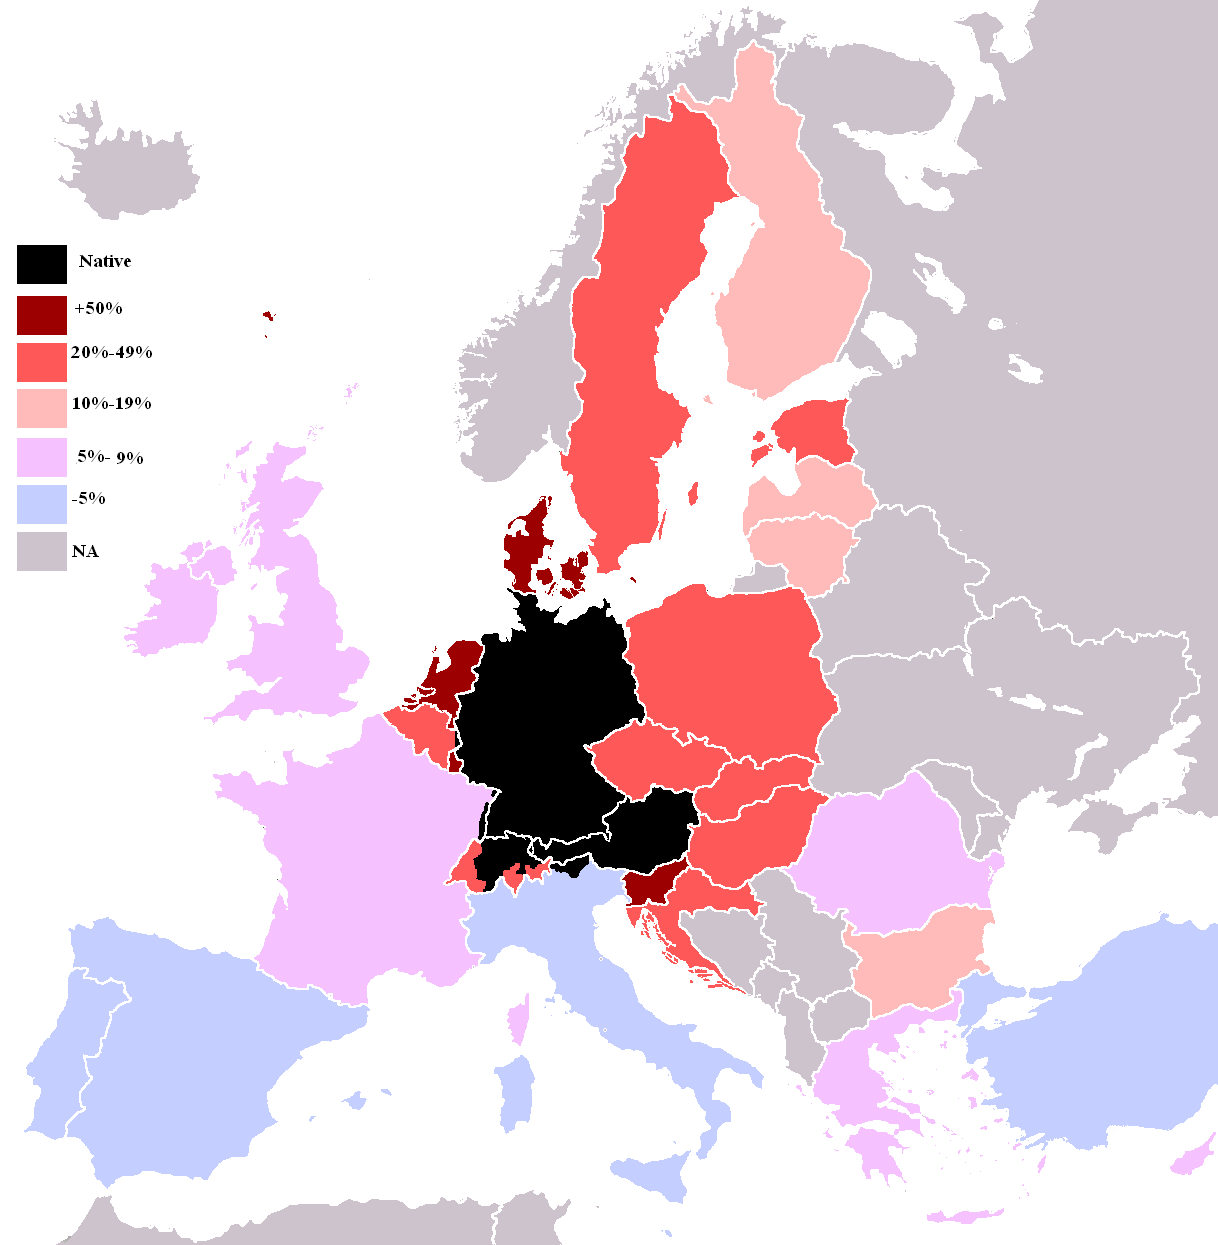 alemany per a viatgers, German, map of Europe